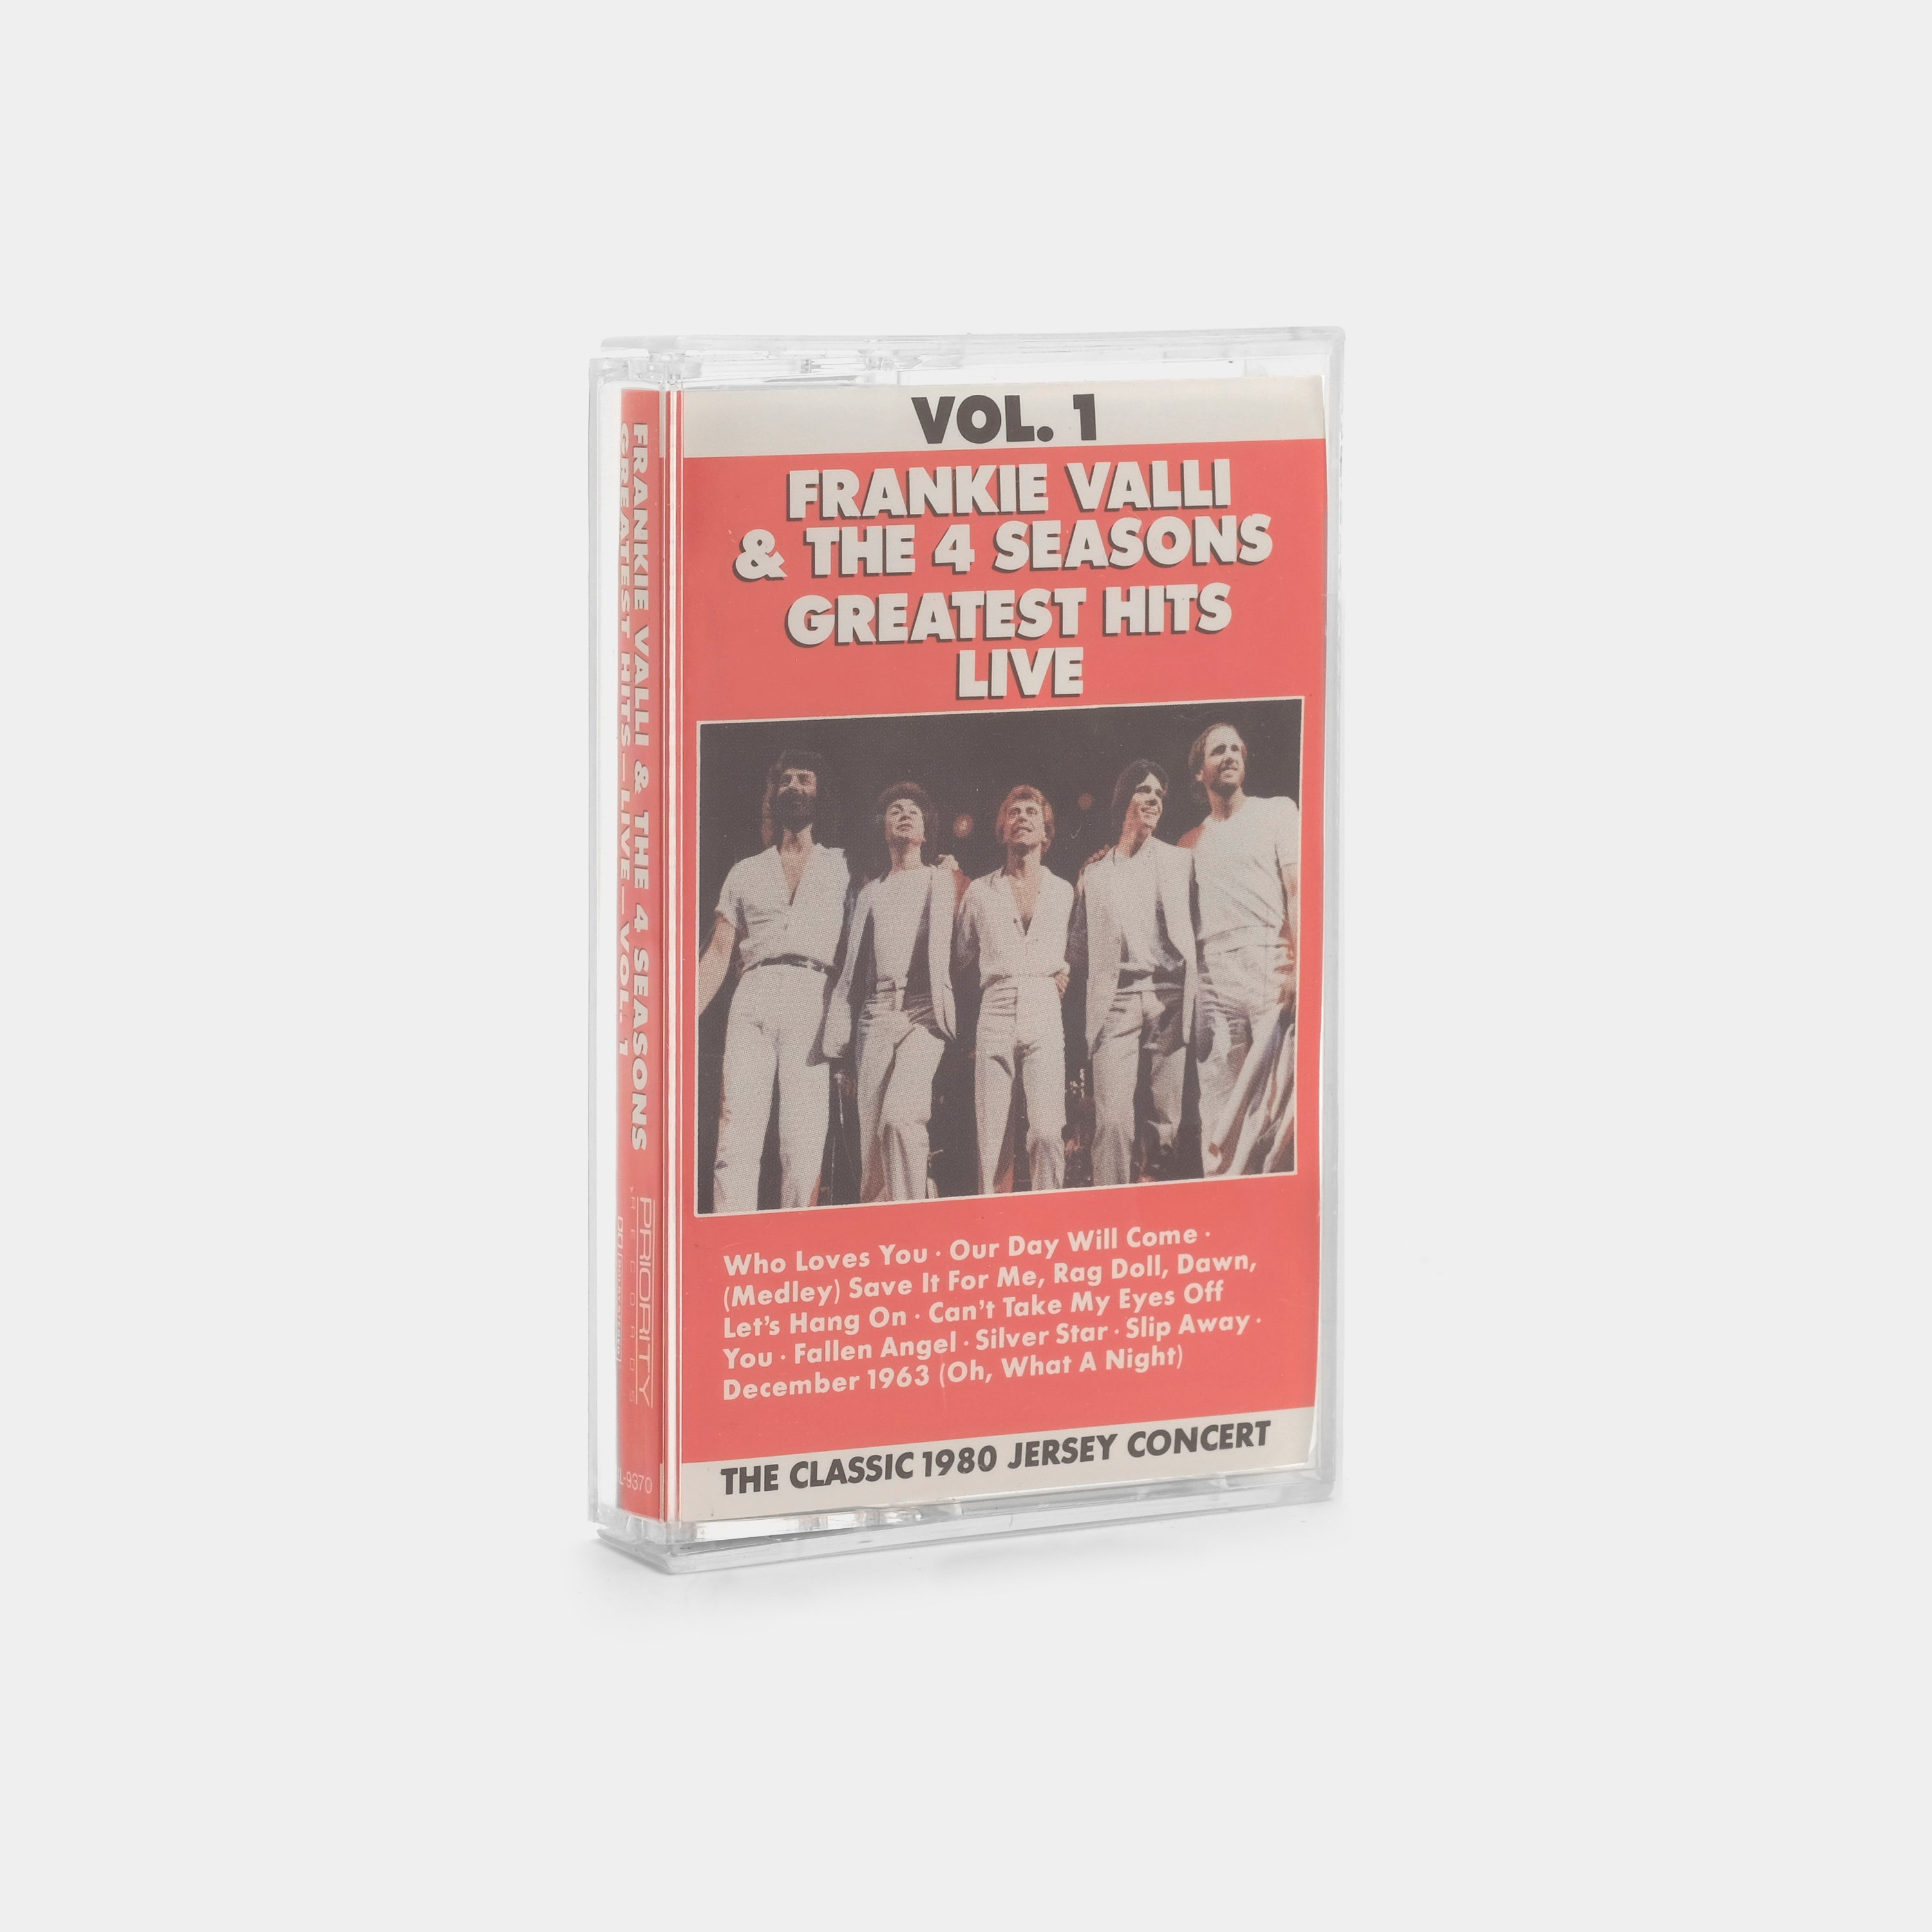 Frankie Valli & The 4 Seasons - Greatest Hits Live Vol. 1  Cassette Tape